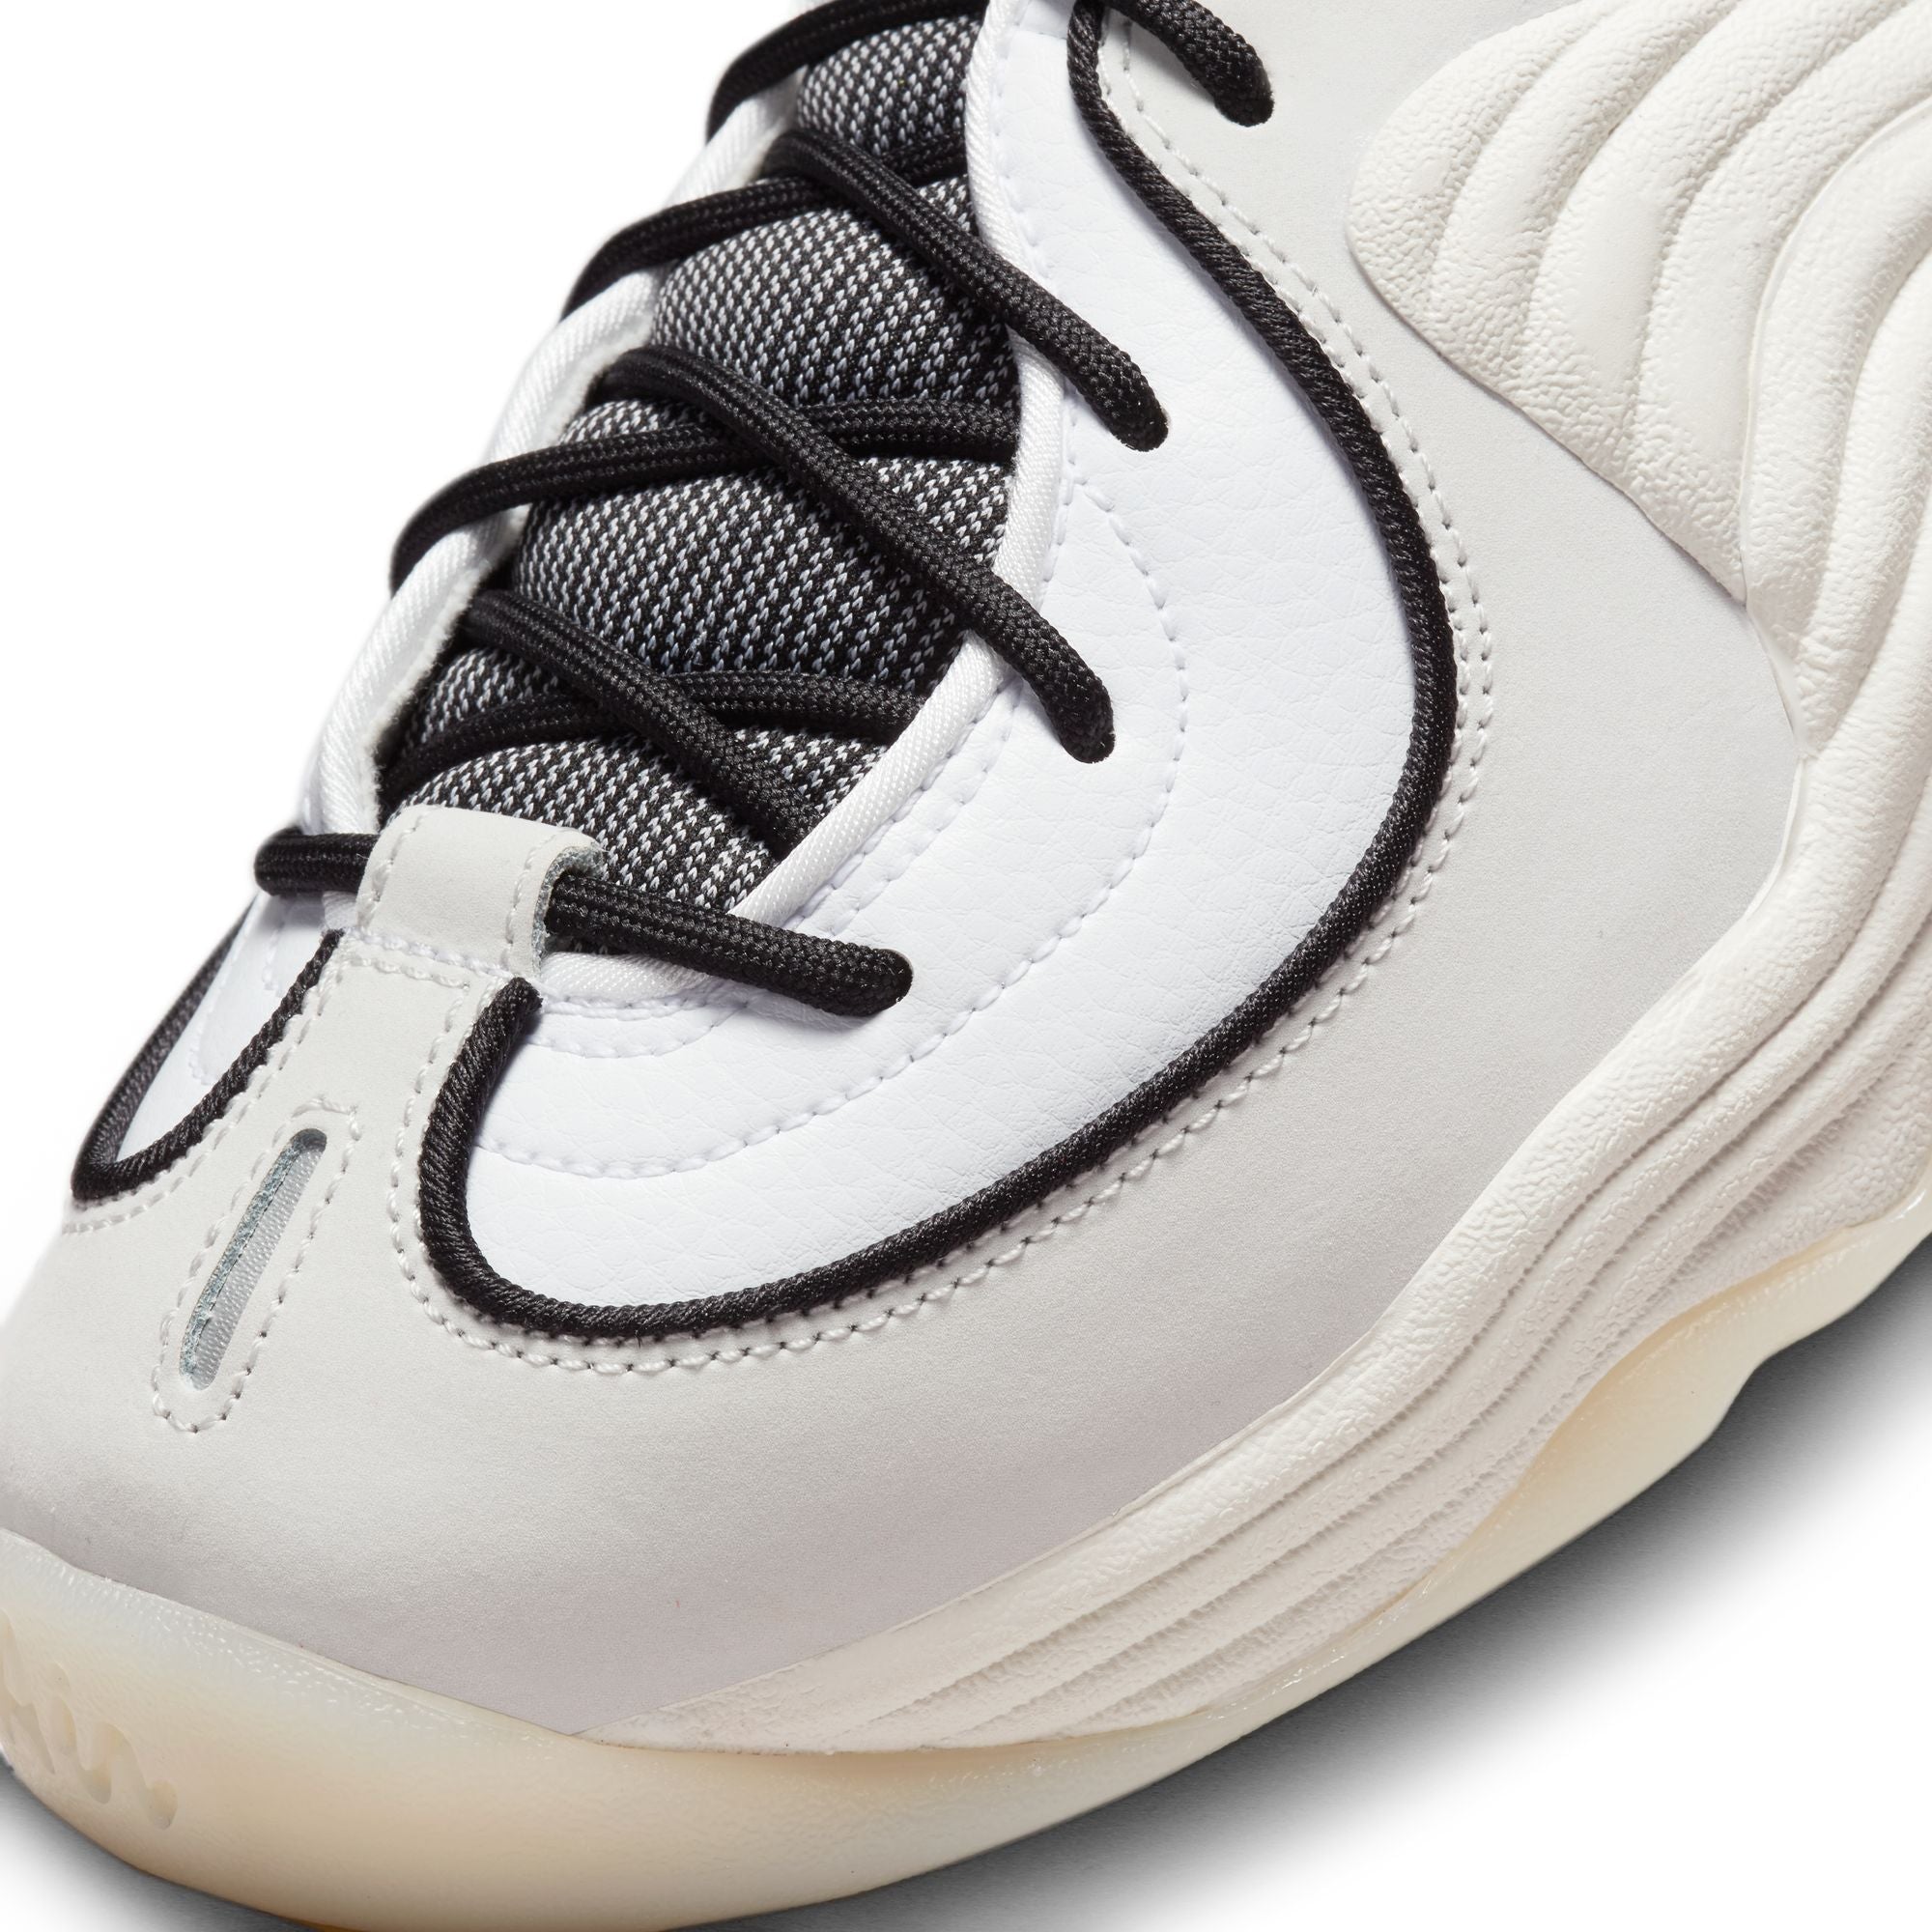 Nike Air Penny 2 'Sail/Photon Dust'